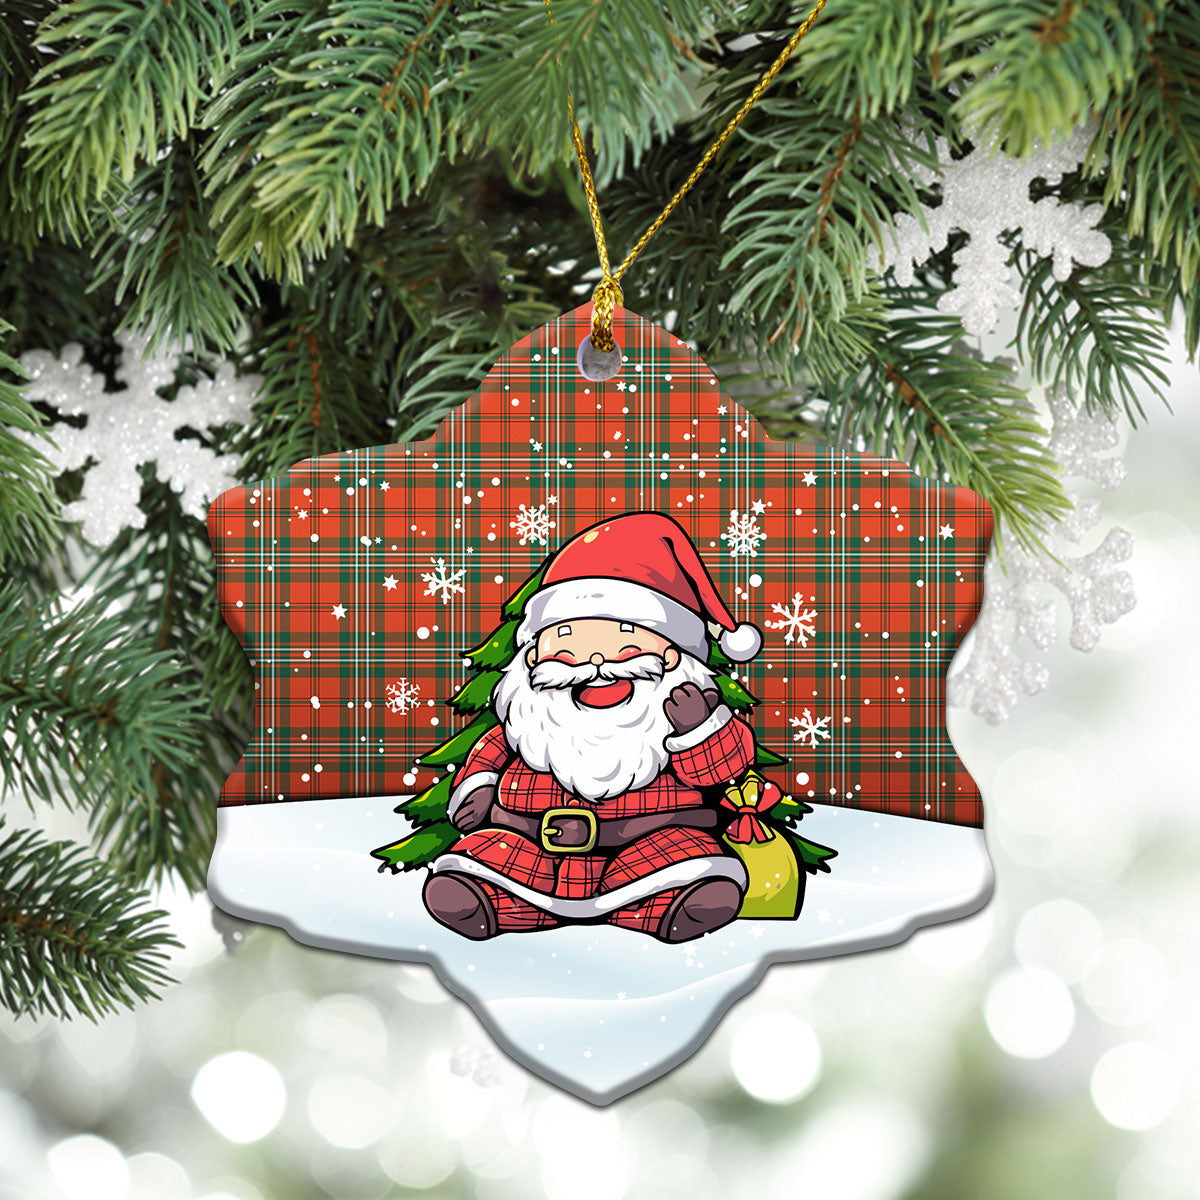 Scott Ancient Tartan Christmas Ceramic Ornament - Scottish Santa Style